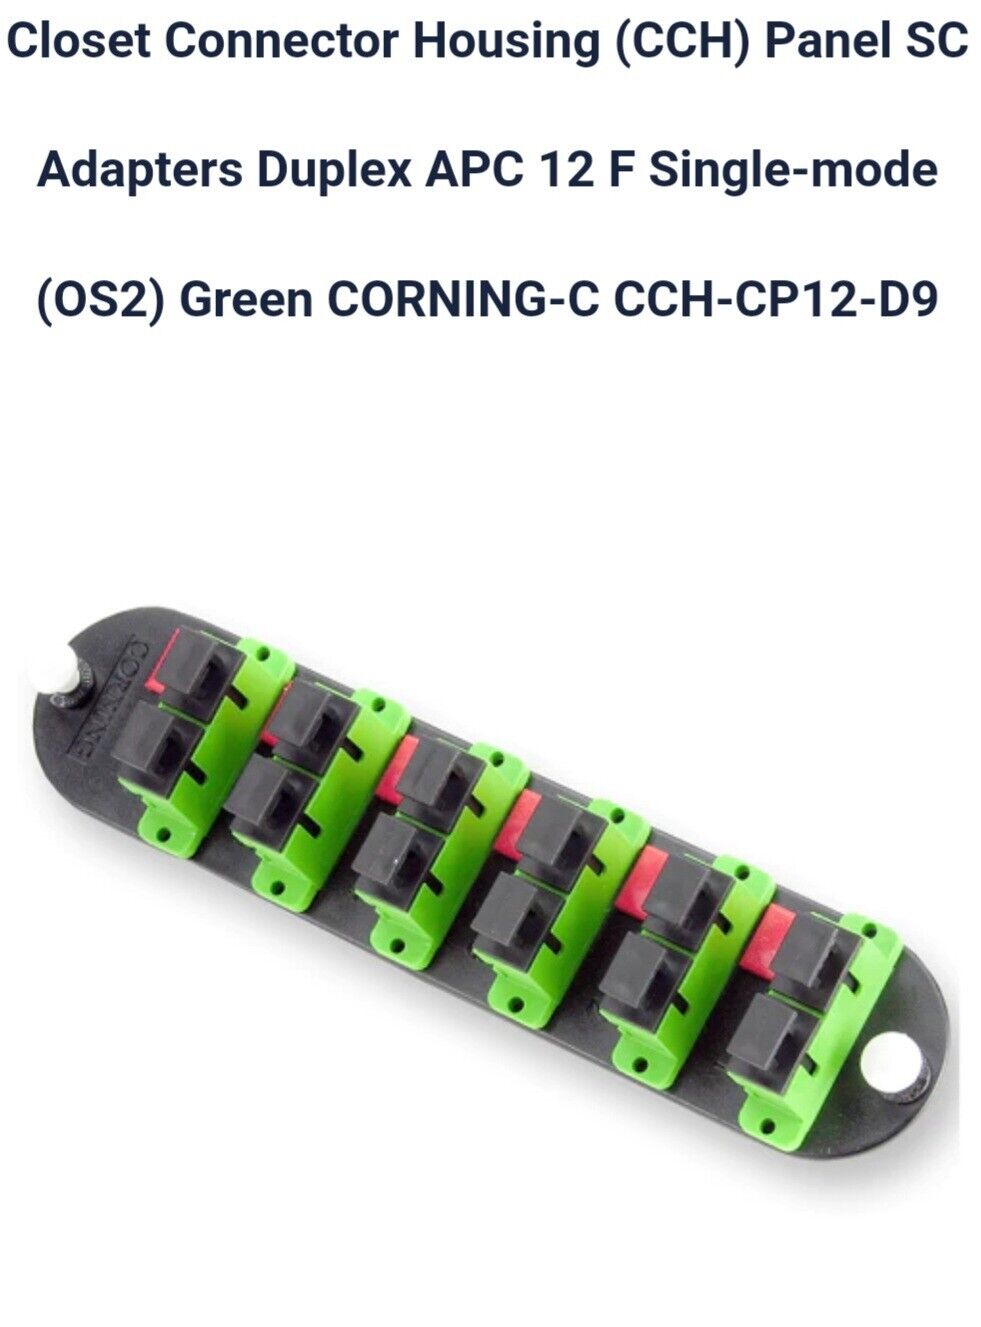 Corning CCH-CP12-D9 Panel, 6 SC Duplex Adapters, SM, 12 Fiber, OS2, Brand New